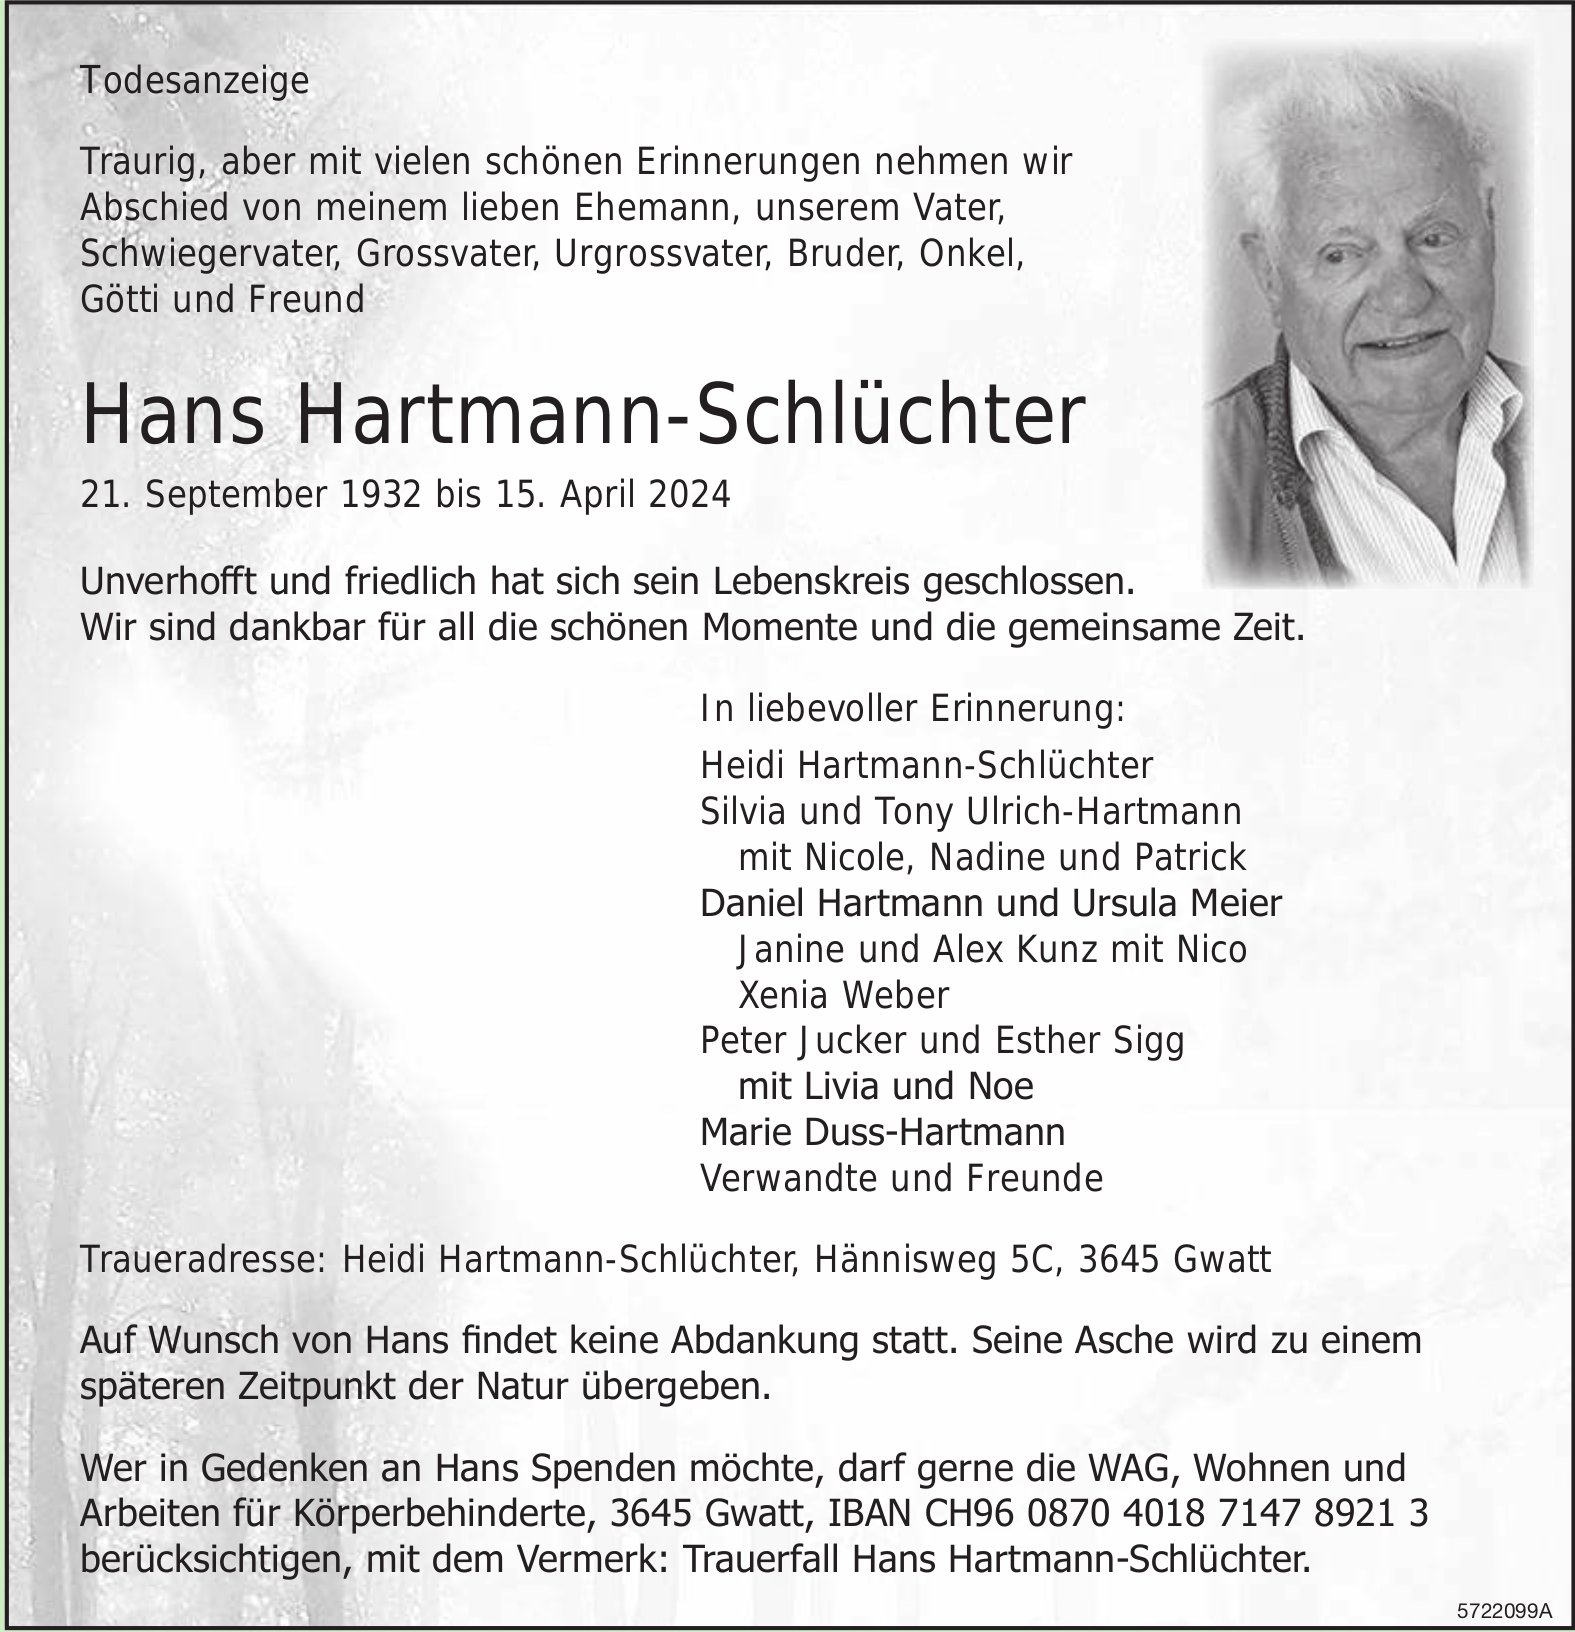 Hartmann-Schlüchter Hans, April 2024 / TA